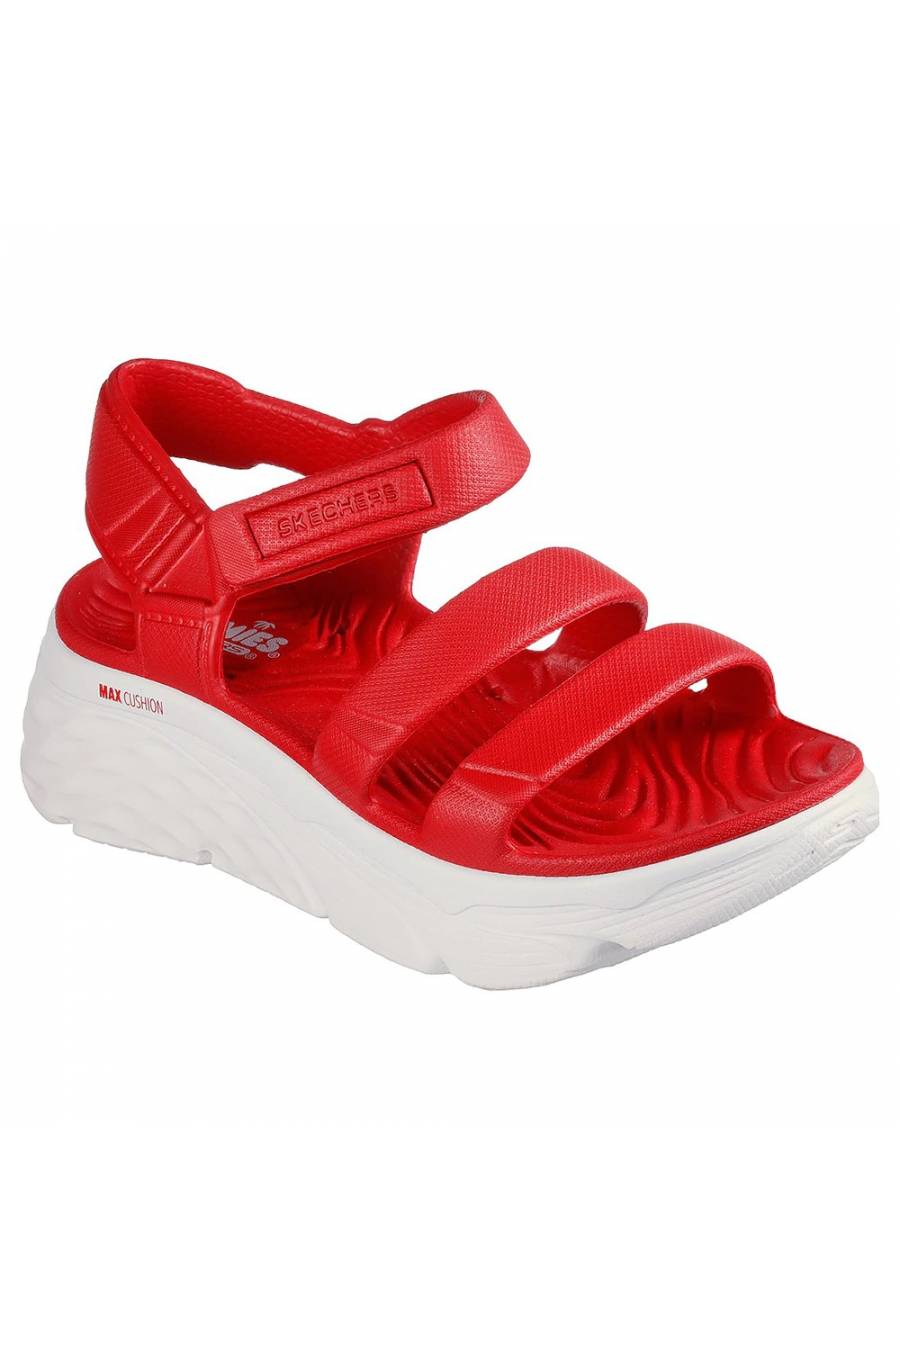 Sandalias Skechers Max Cushioning - Aura 111126-RED